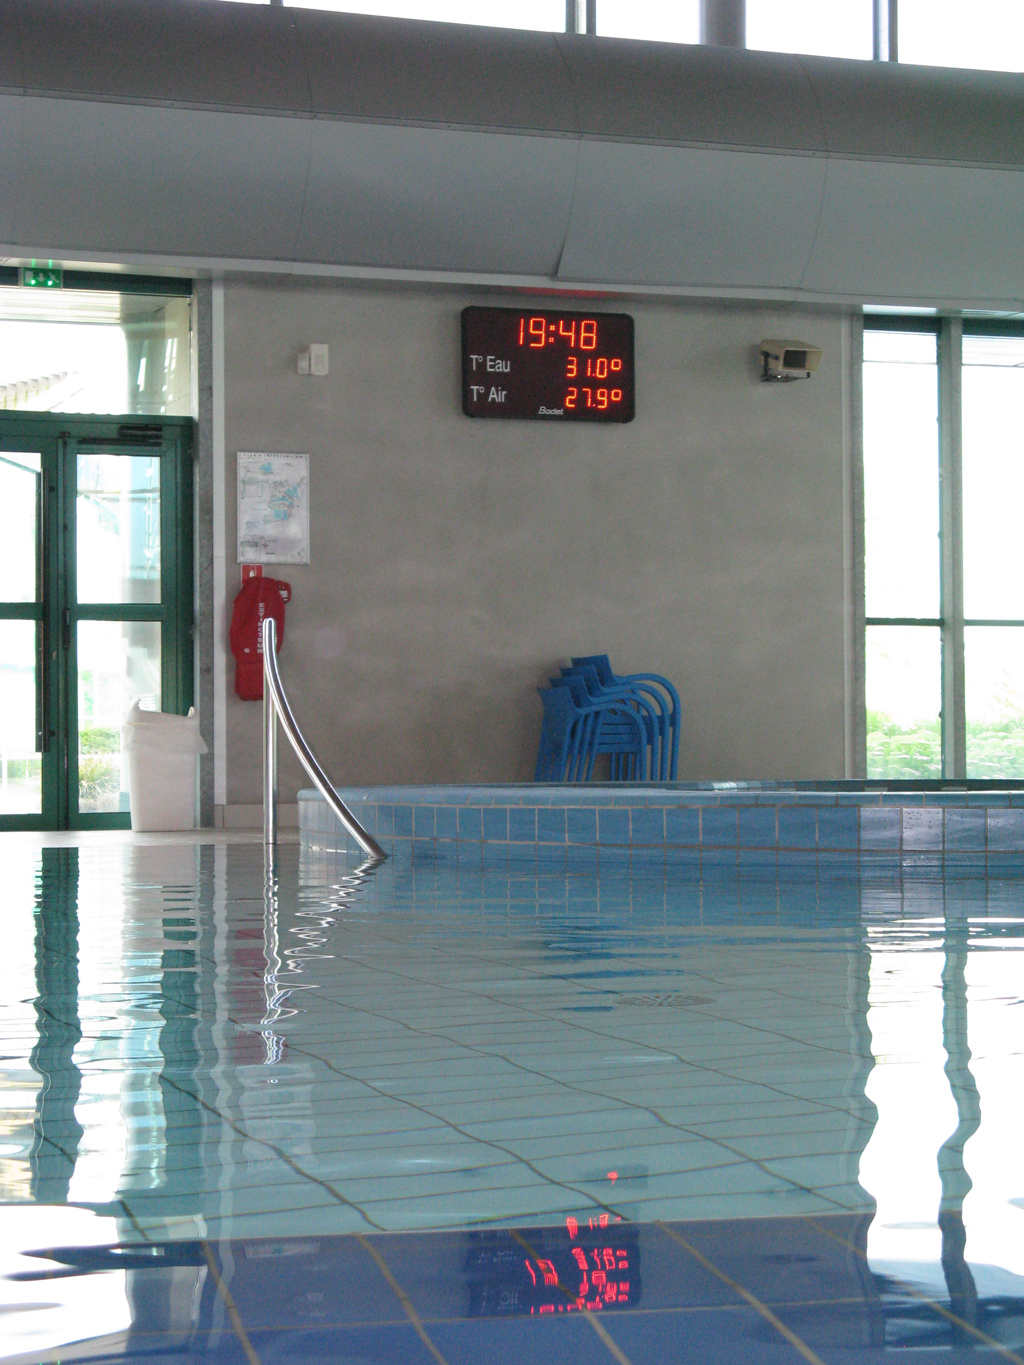 water-polo-scoreboards-glisseo-cholet-pool-2